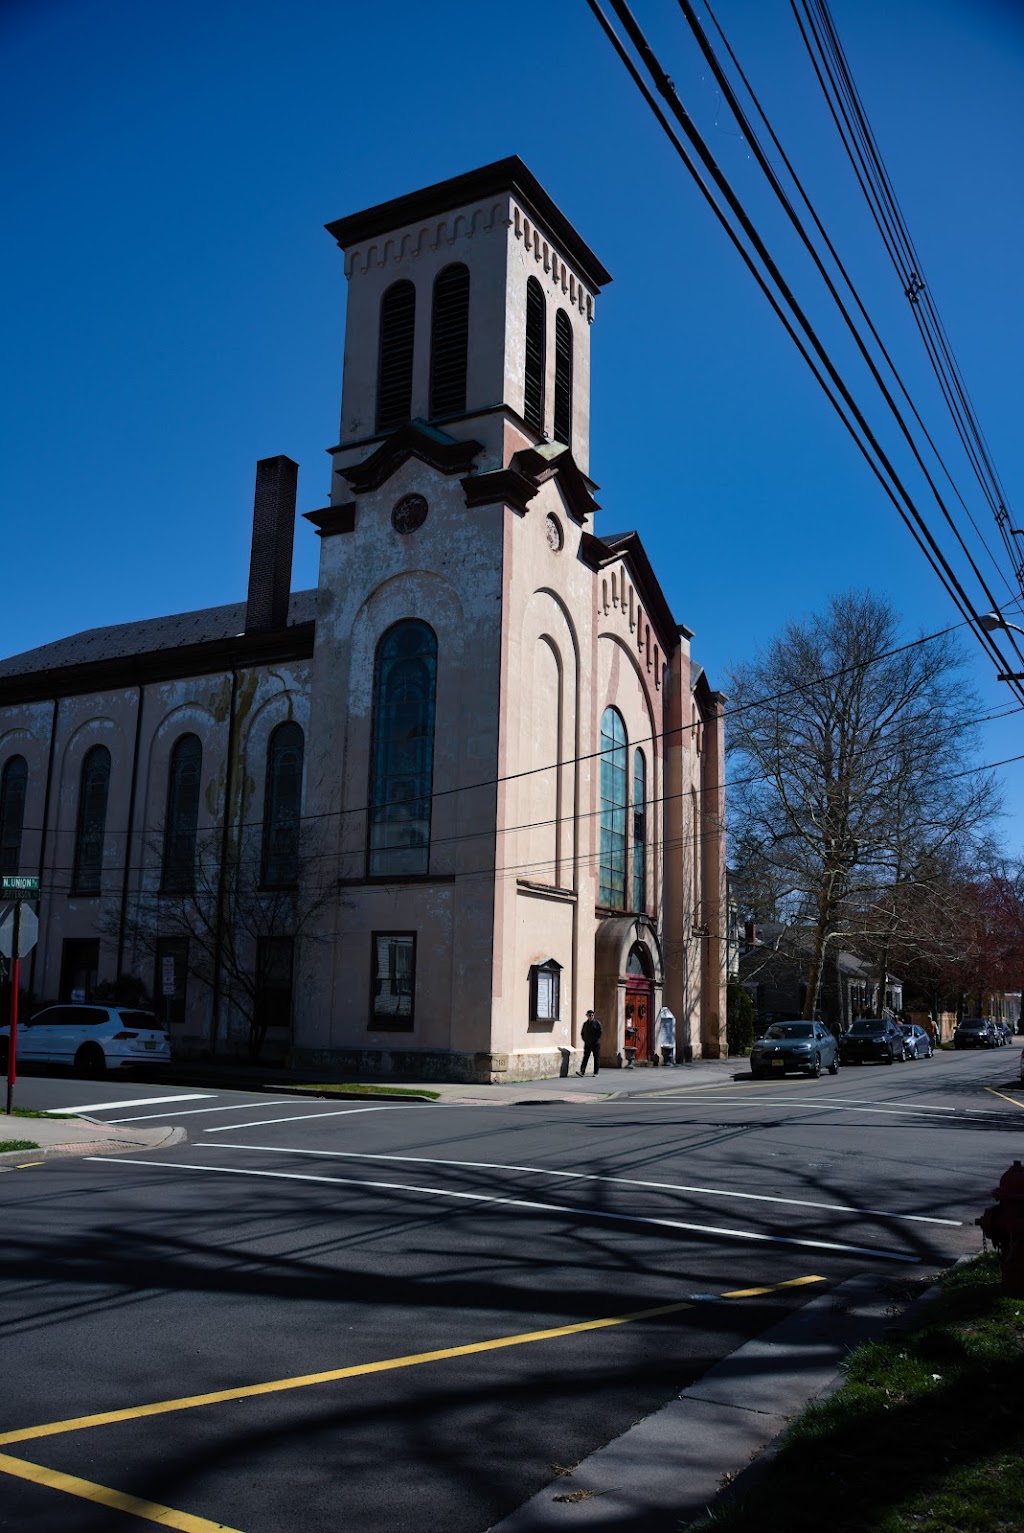 Centenary United Methodist Church | 108 N Union St, Lambertville, NJ 08530, USA | Phone: (609) 397-2468